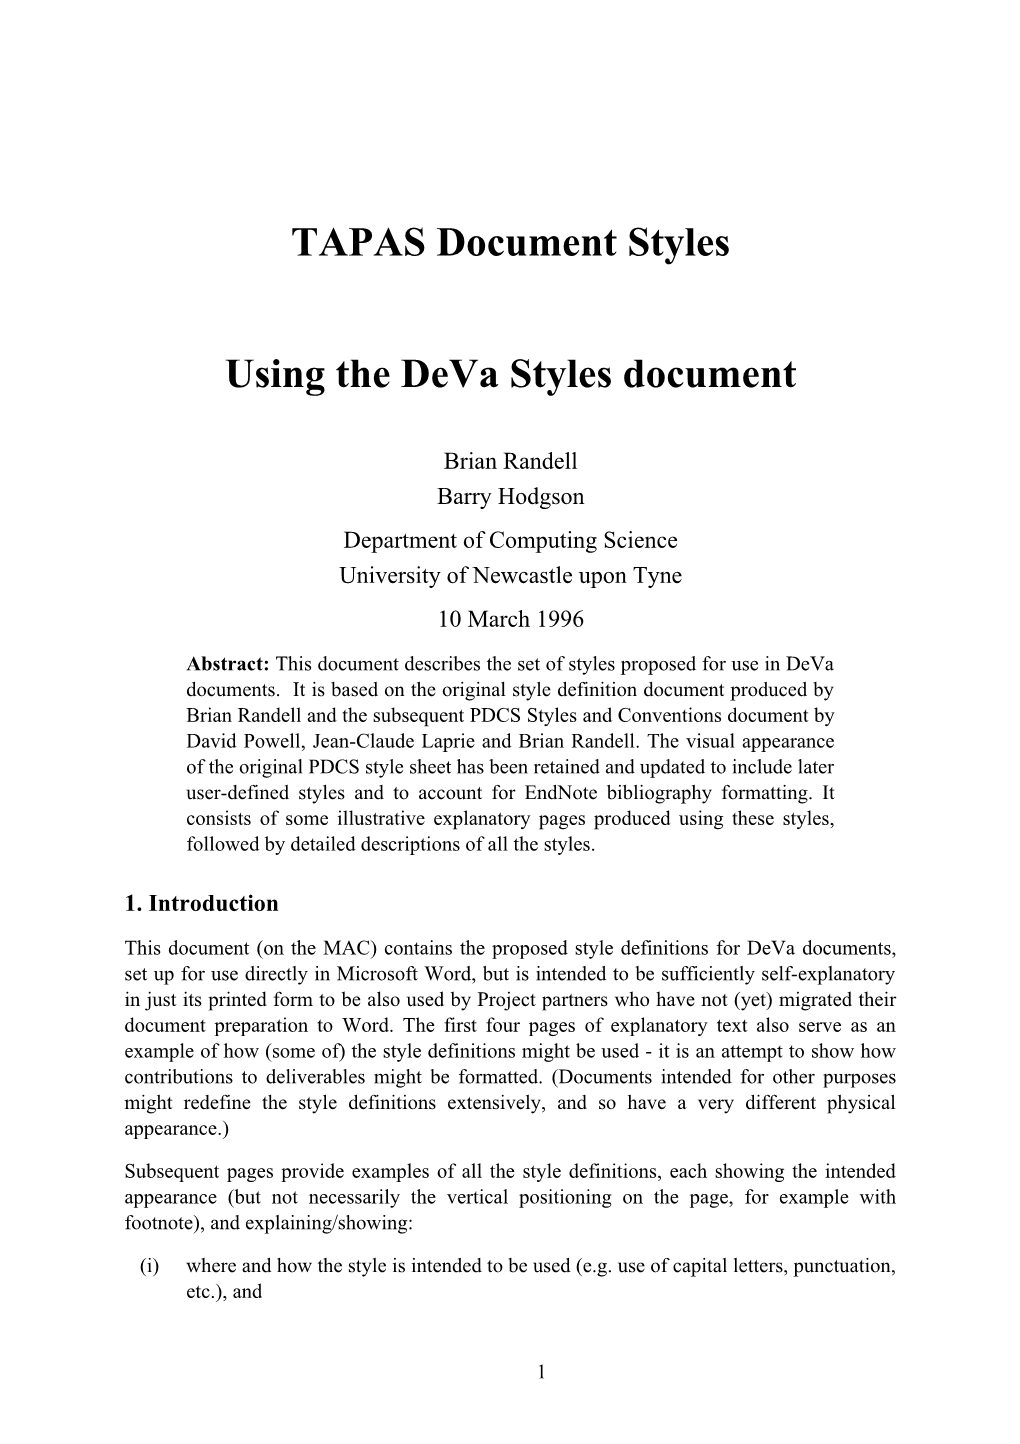 Using the Deva Styles Document